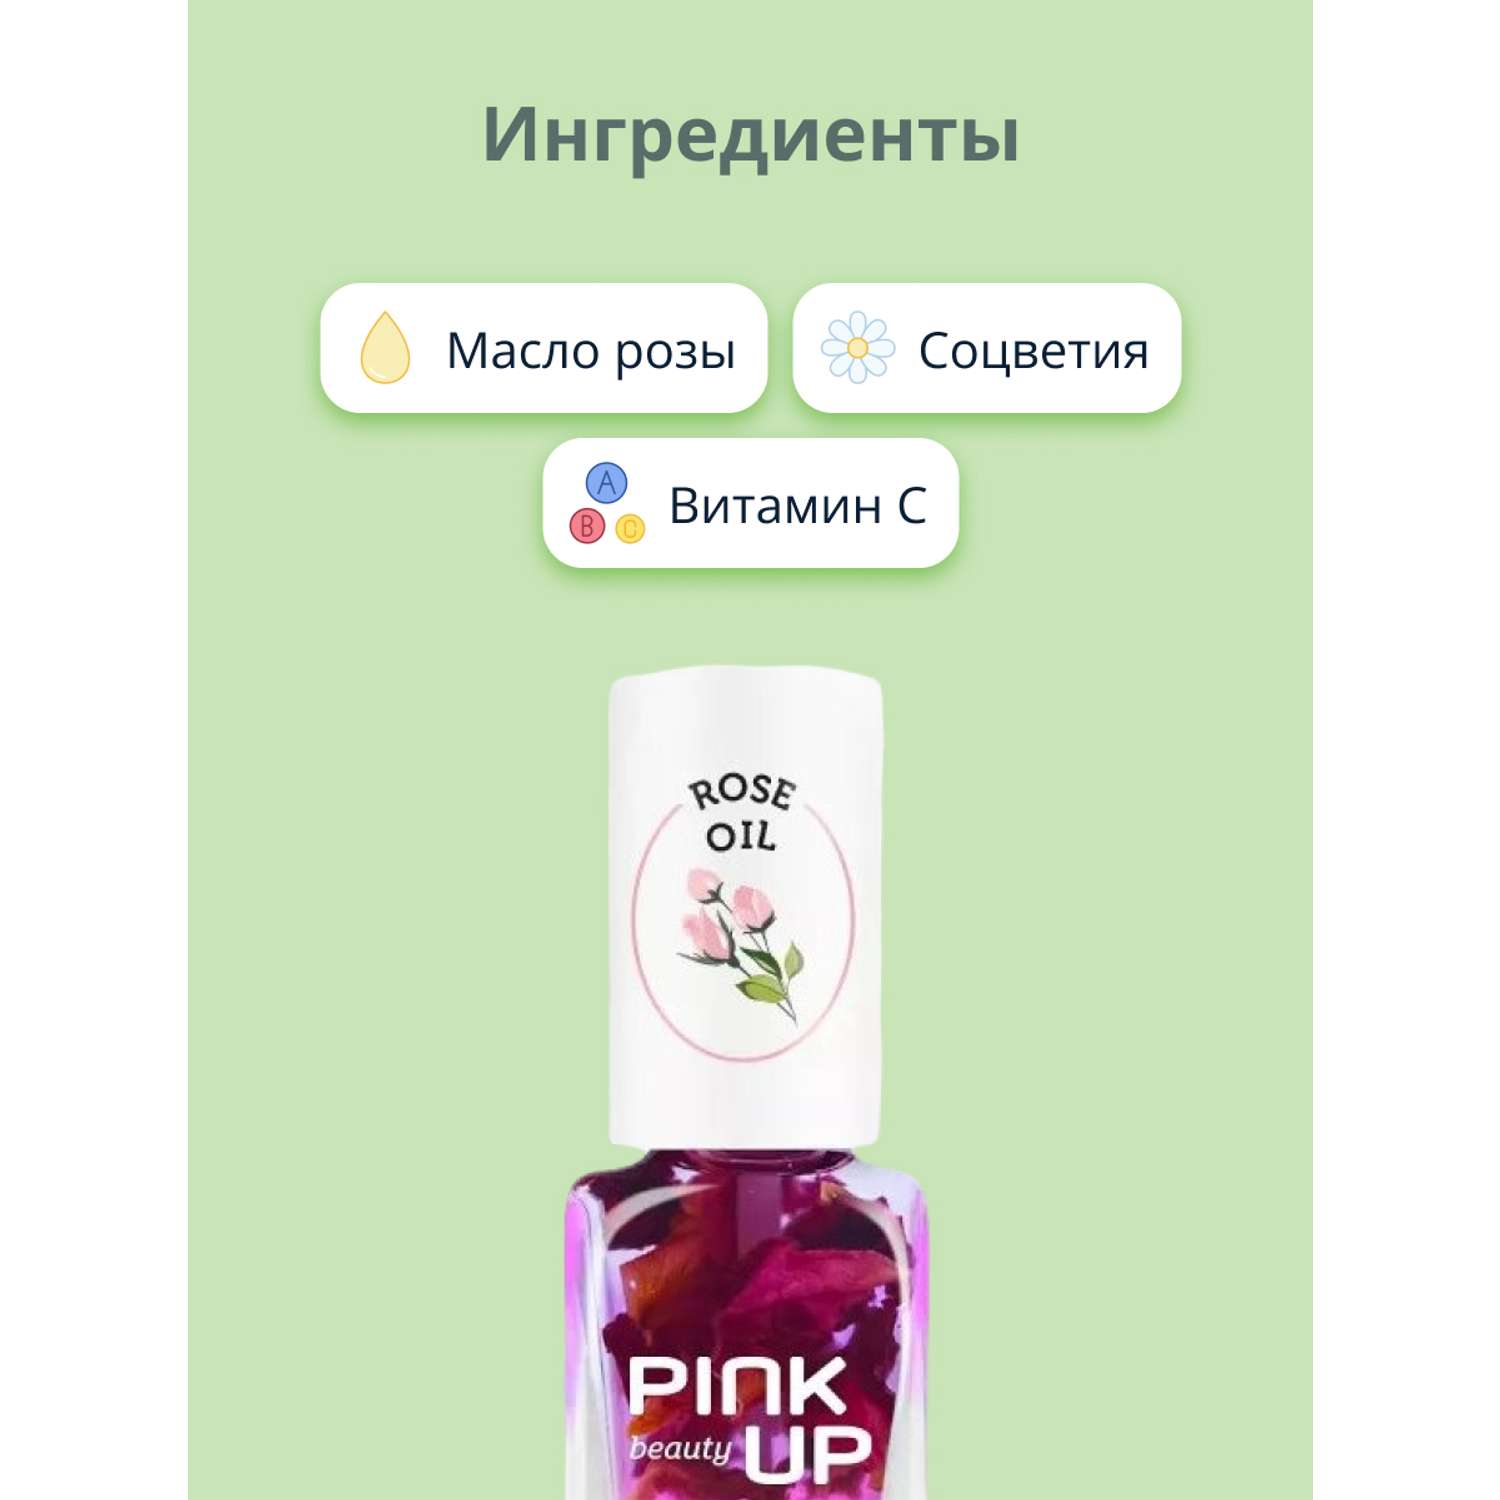 Масло для ногтей и кутикулы Pink Up rose oil 11 мл - фото 2